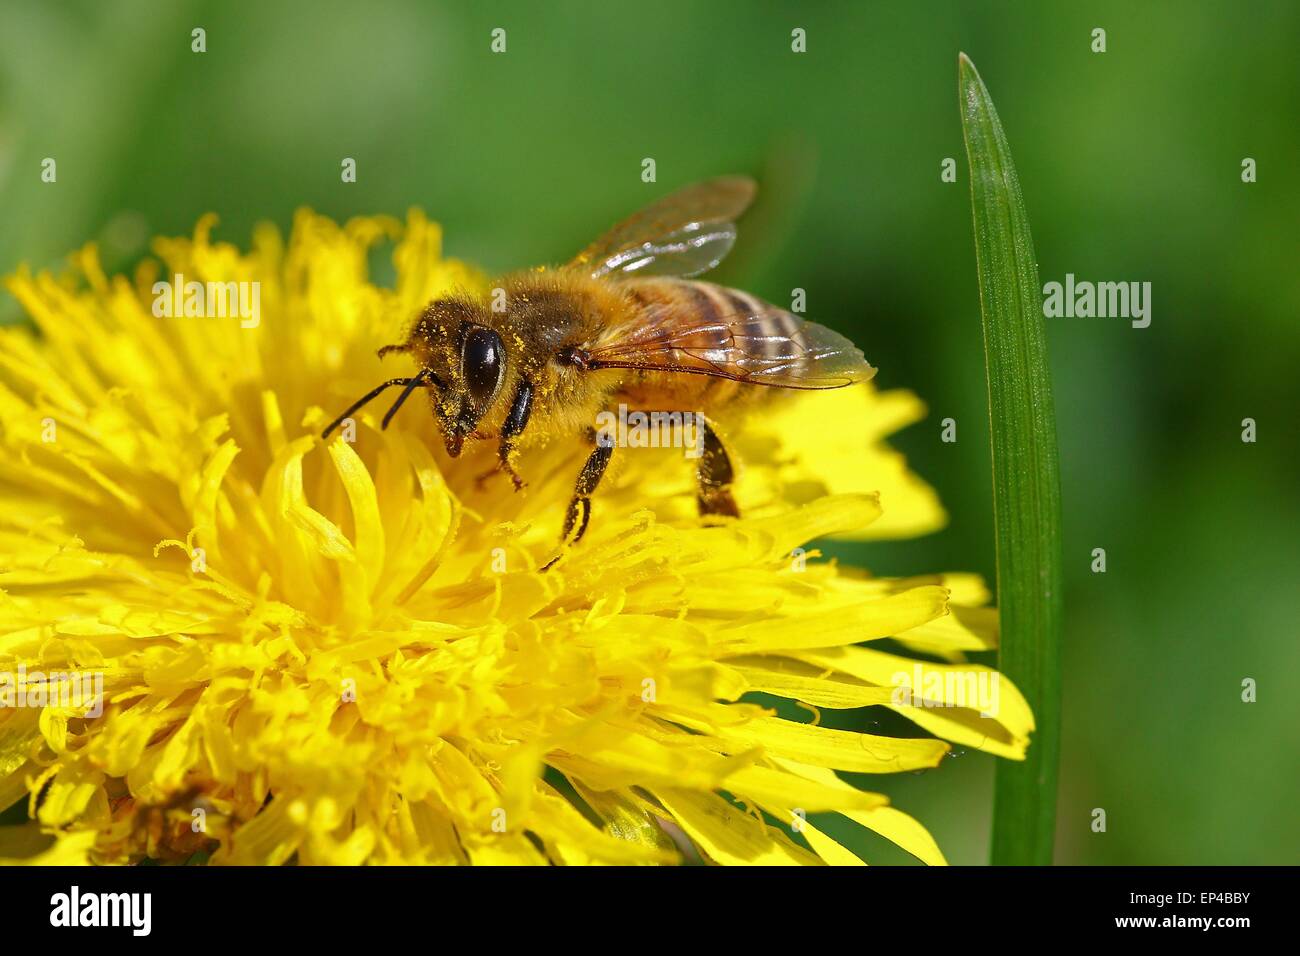 Honey bee going through a yellow flower Stock Photo